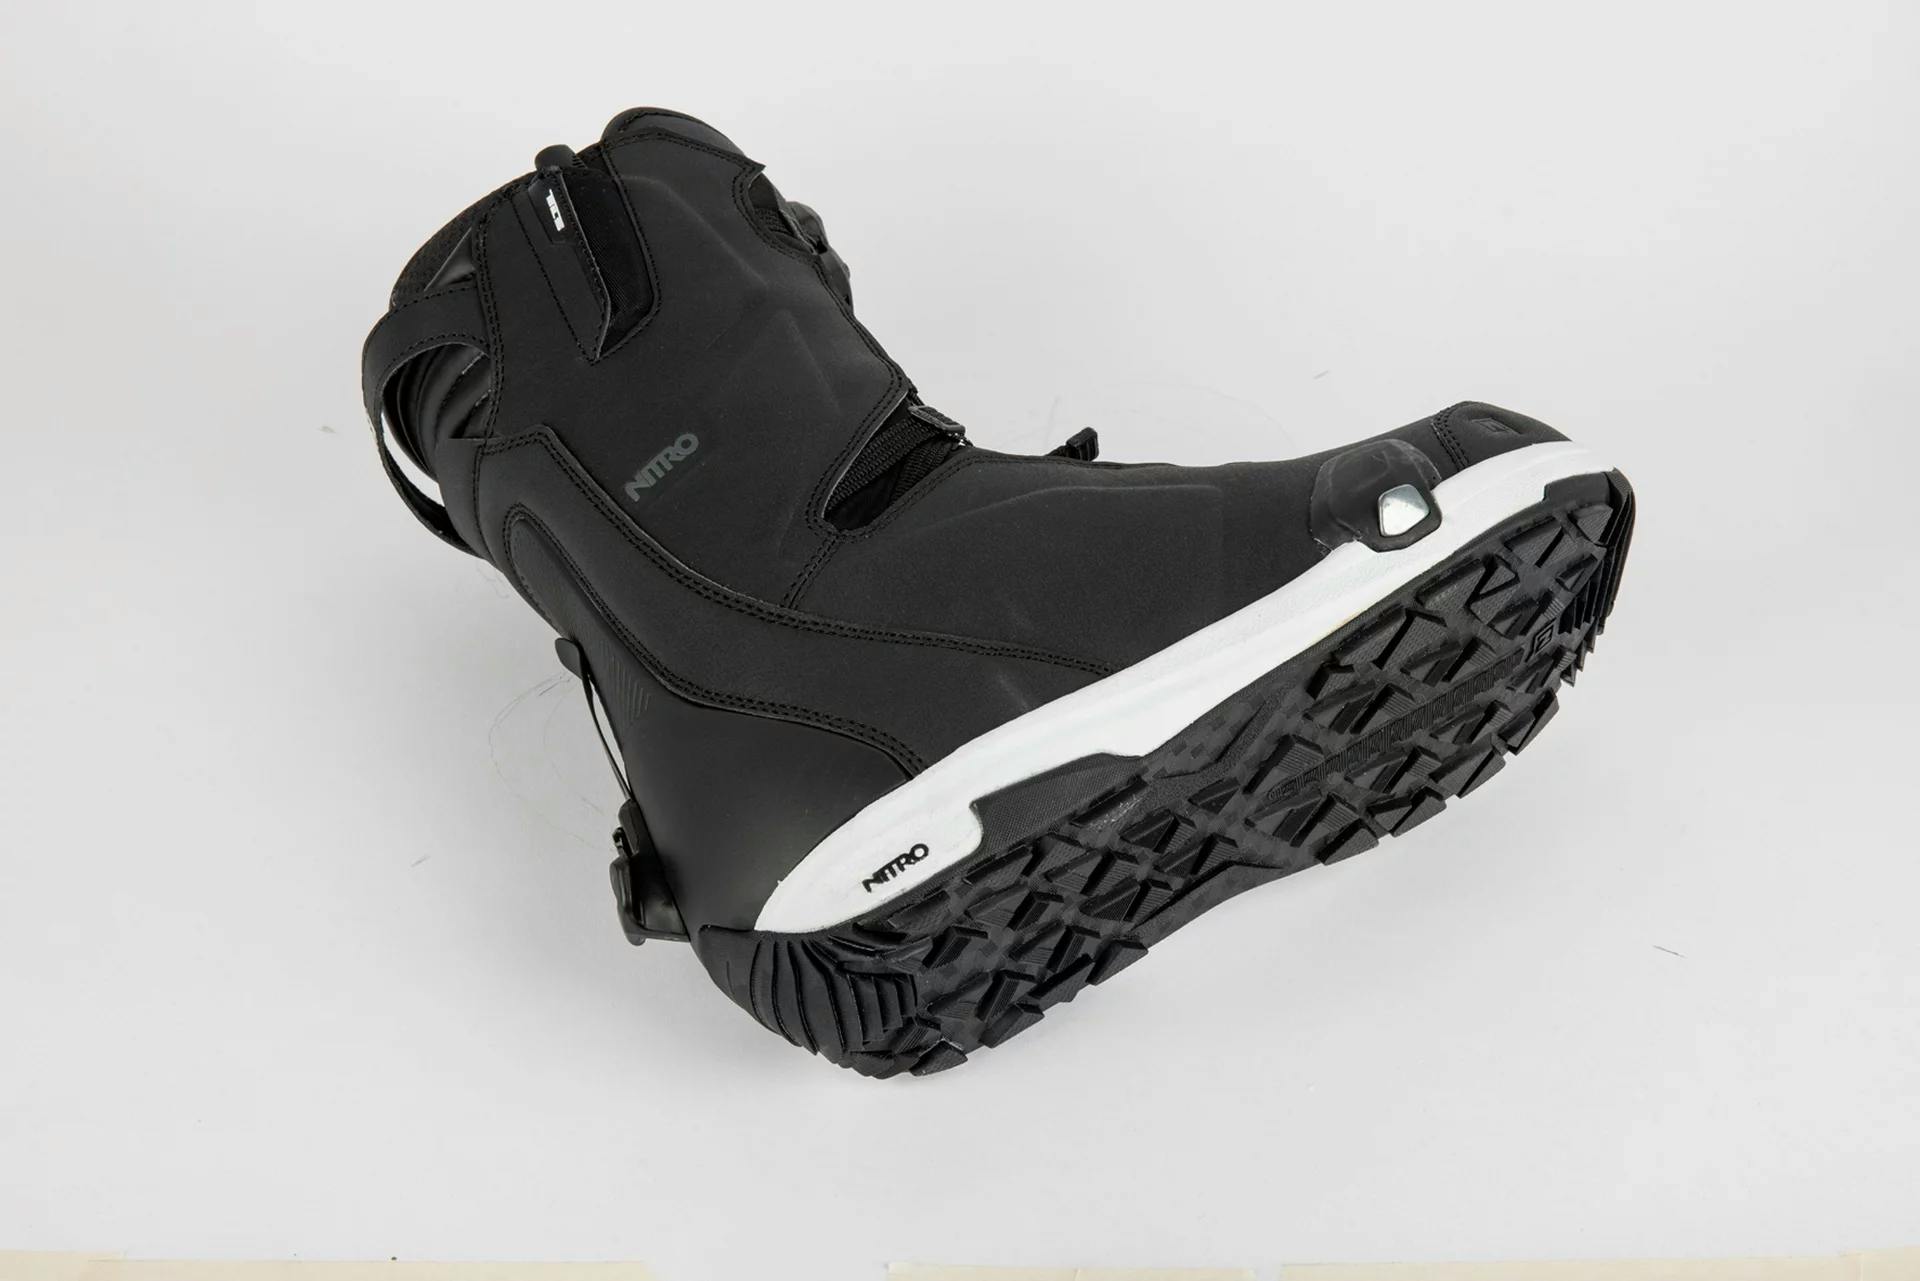 Nitro Profile TLS Step On Snowboard Boots · 2023